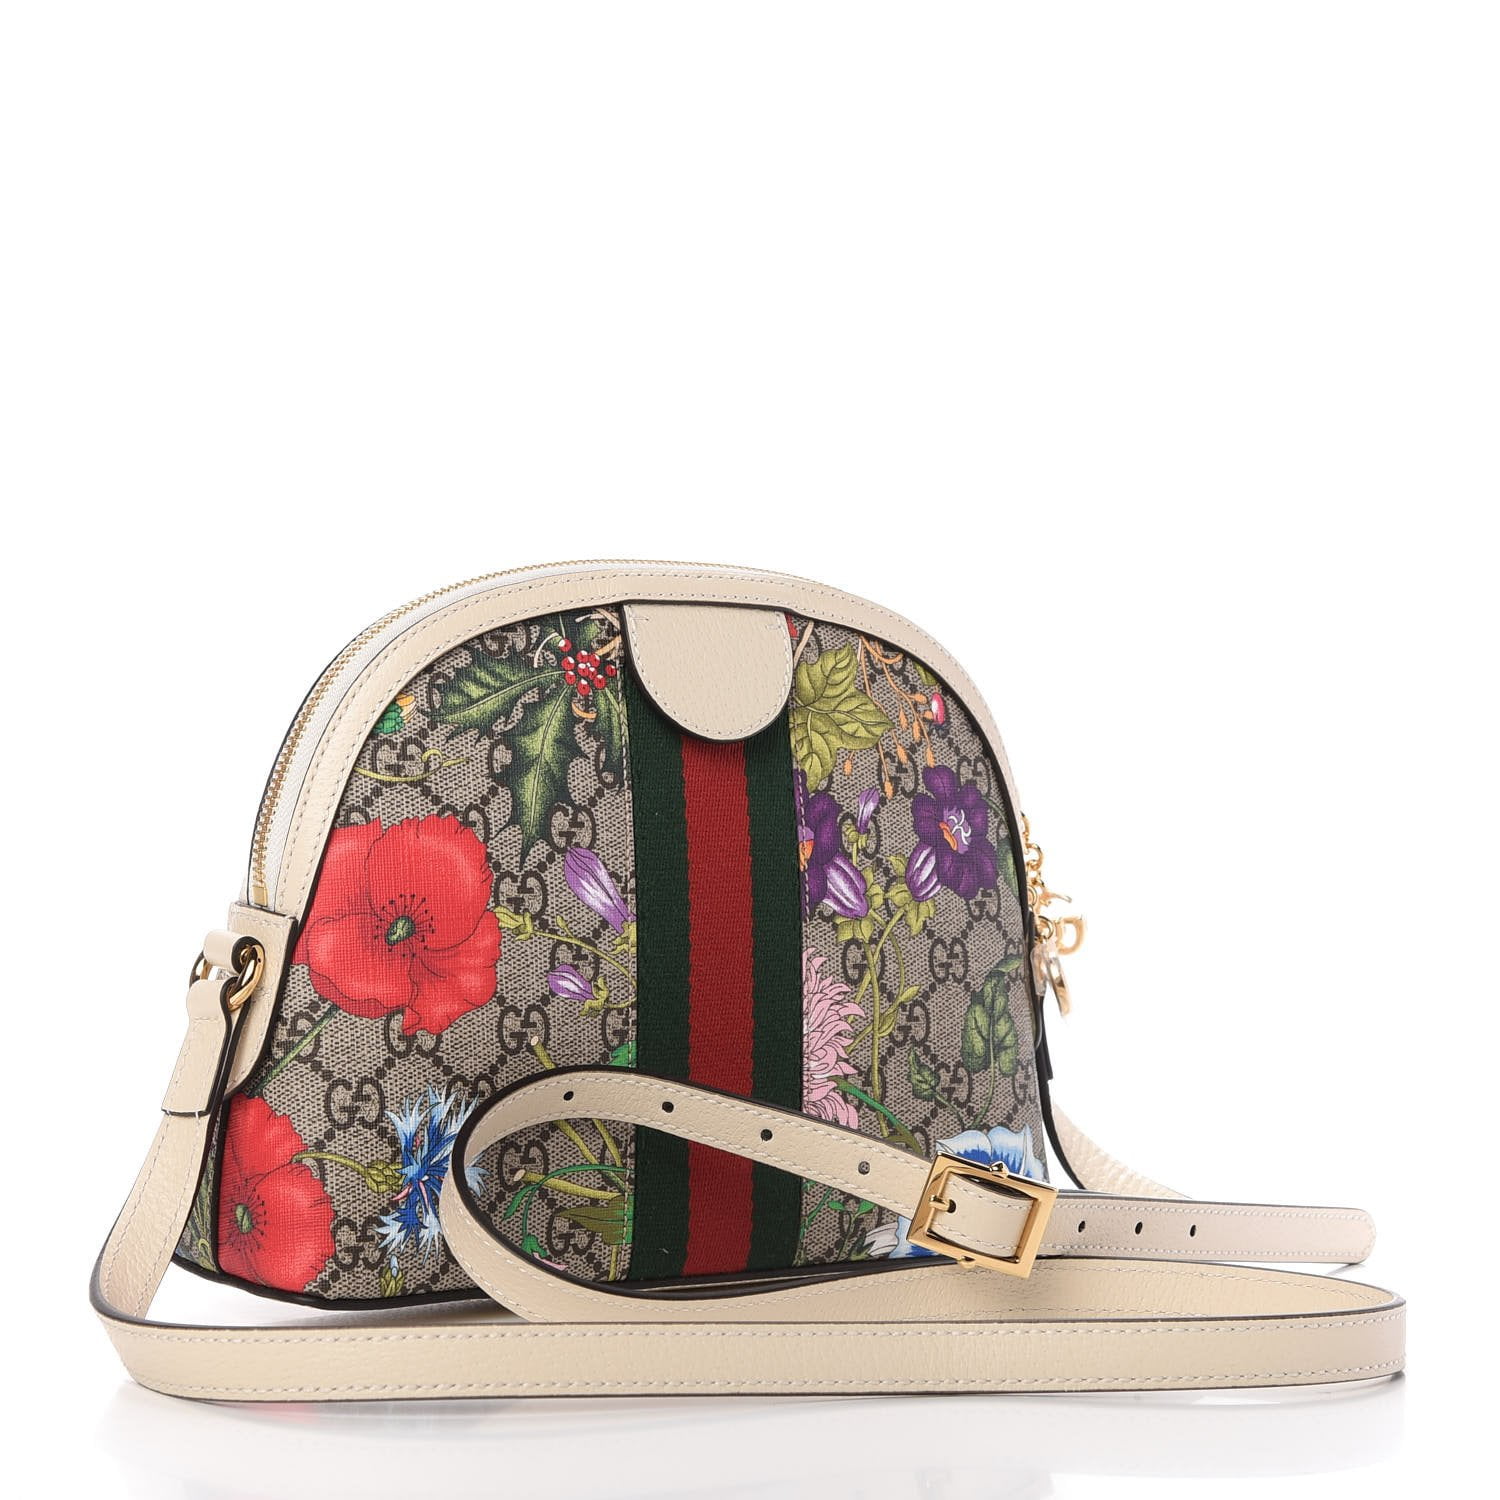 Authentic Gucci 499621 Ophidia Flora Dome Shoulder Bag, Handbag, Crossbody  NWT